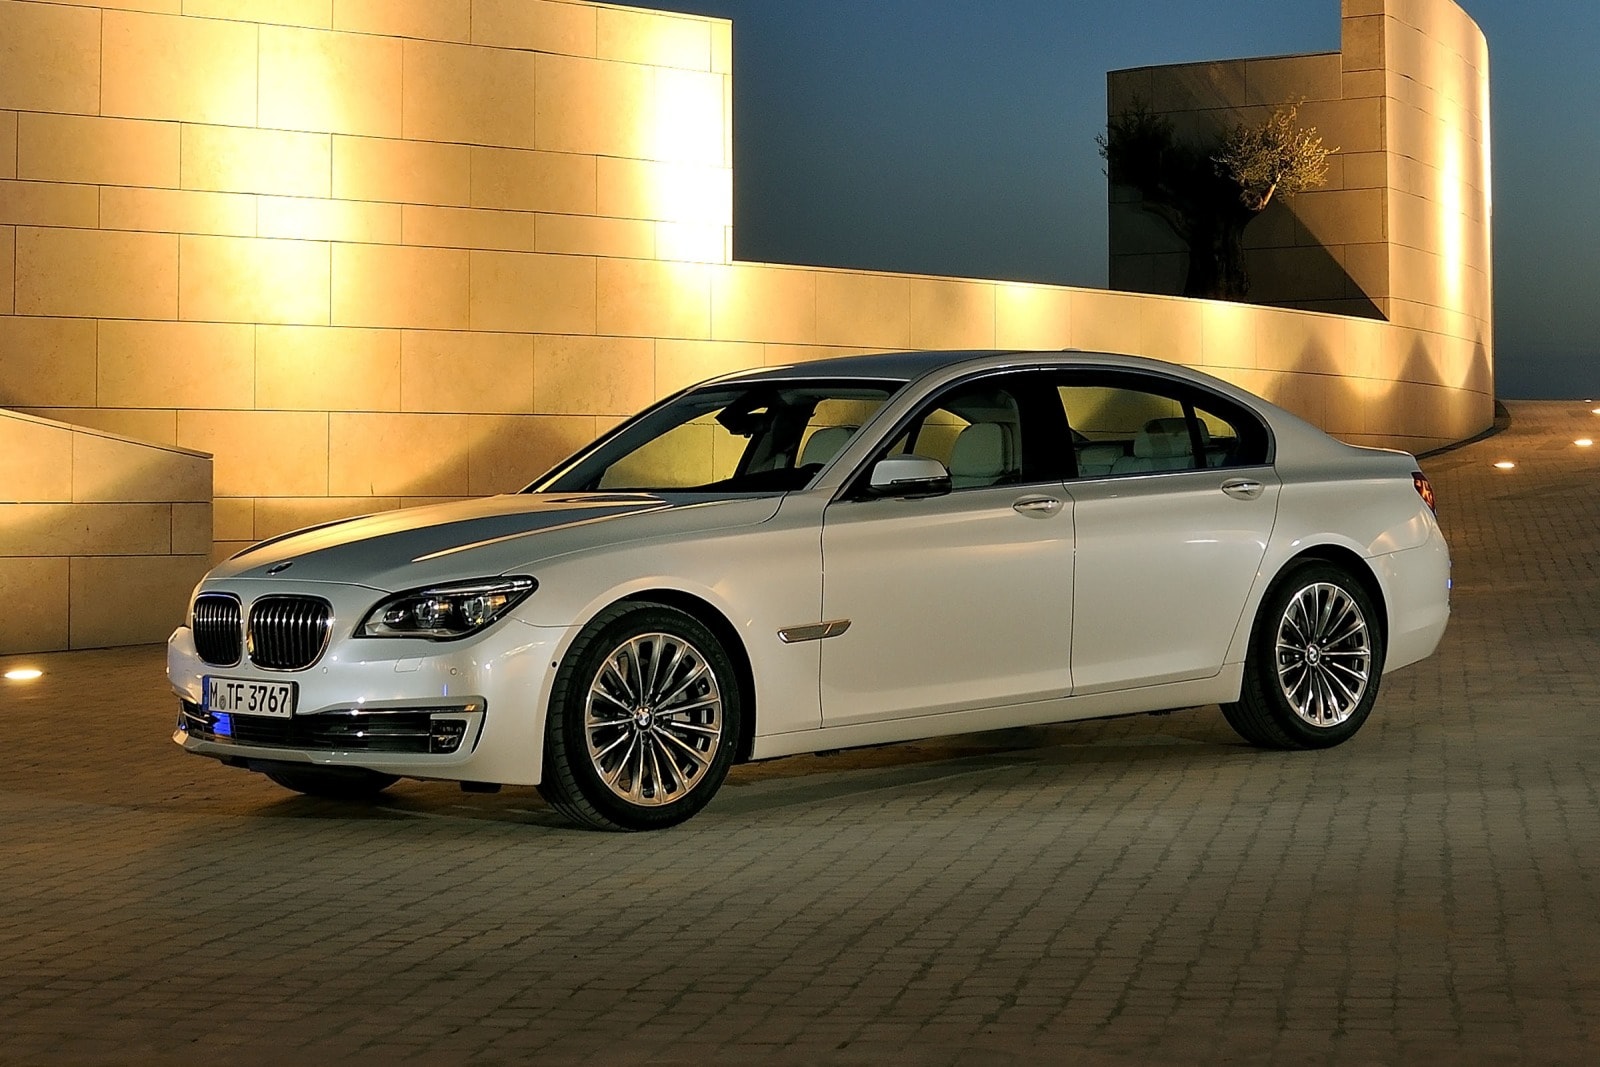 2013 BMW 7 Series Review & Ratings | Edmunds